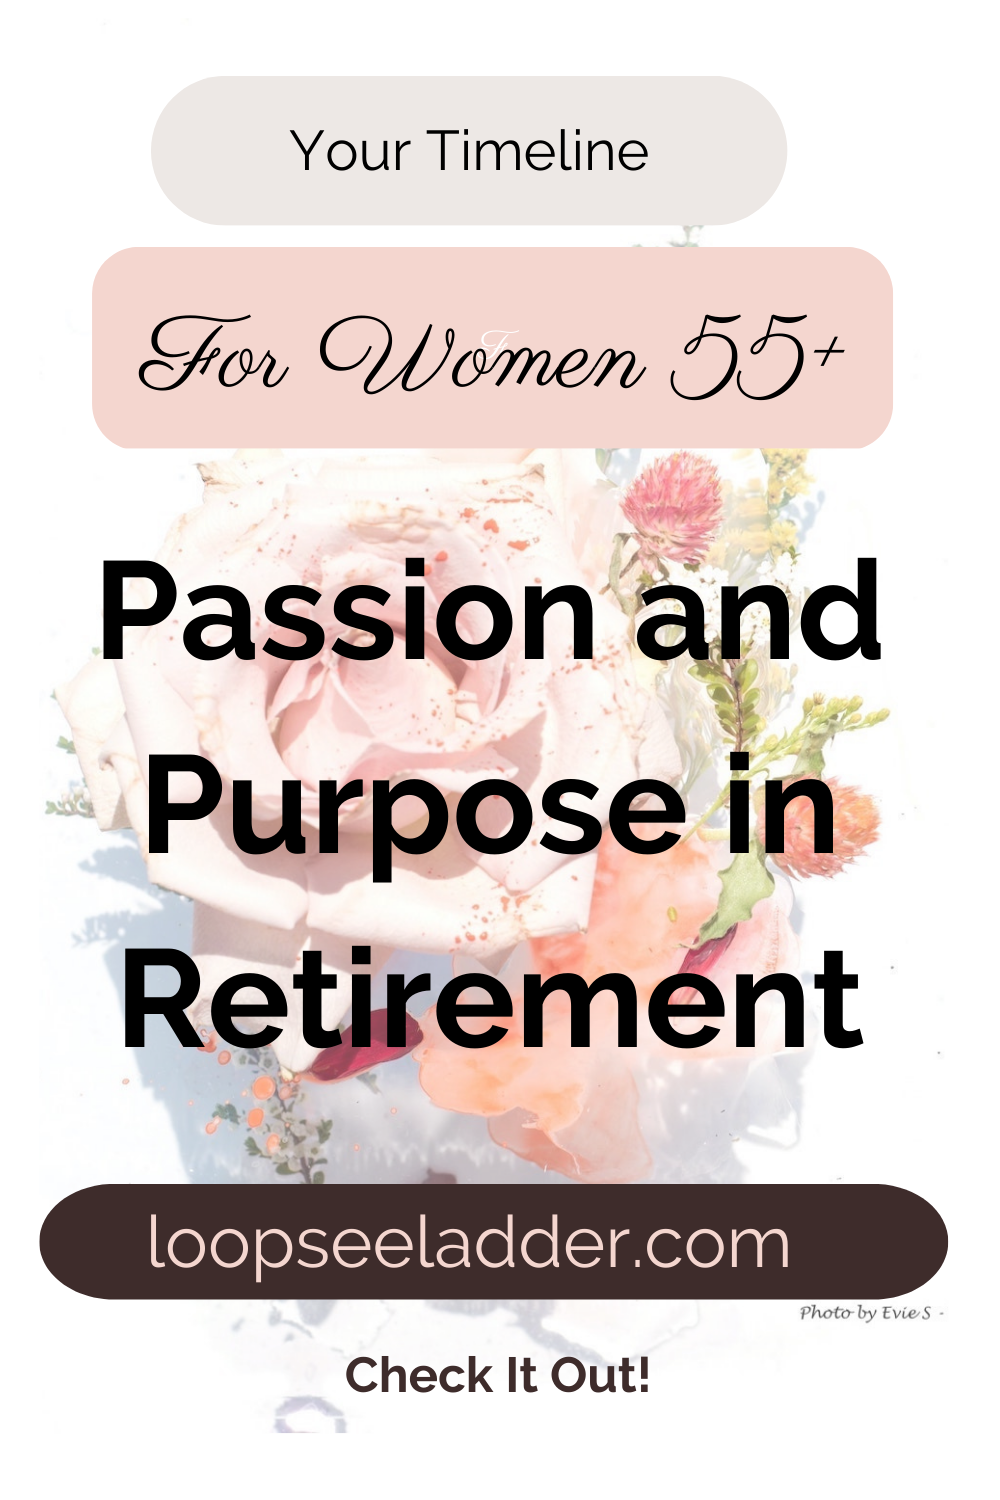 Passiona dn Purpose in Retirement For Women 55+